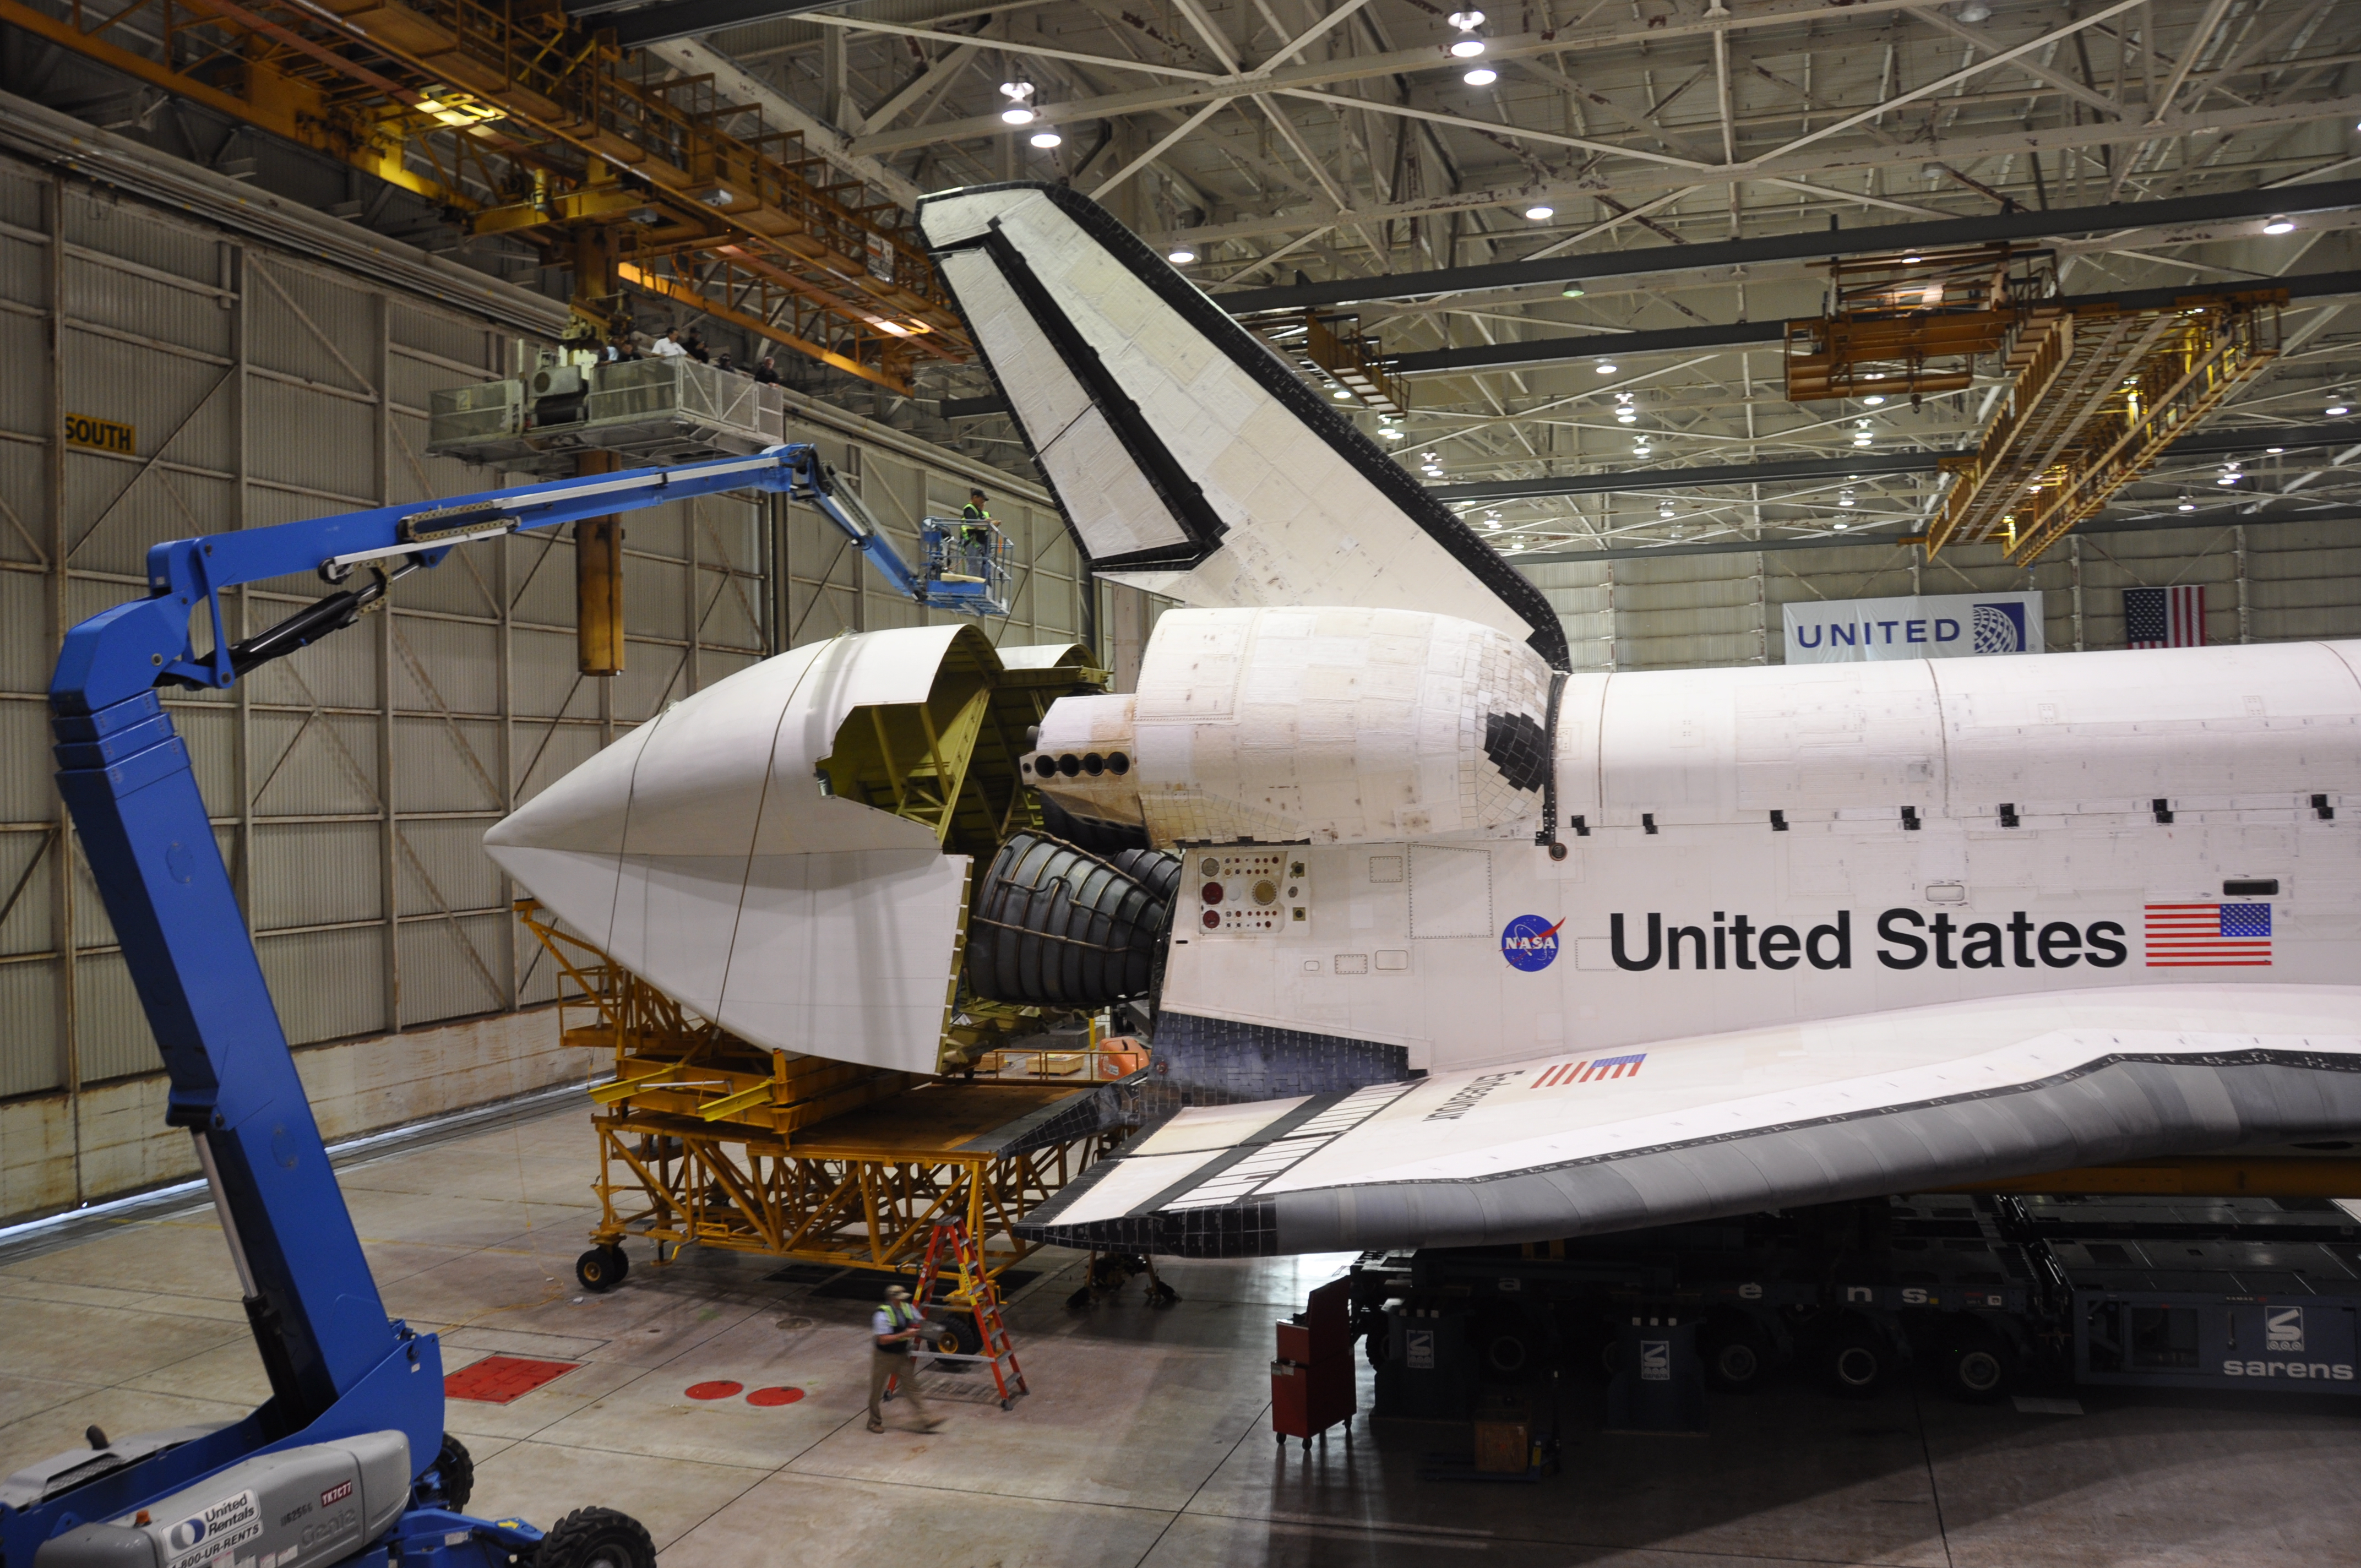 space shuttle hangar